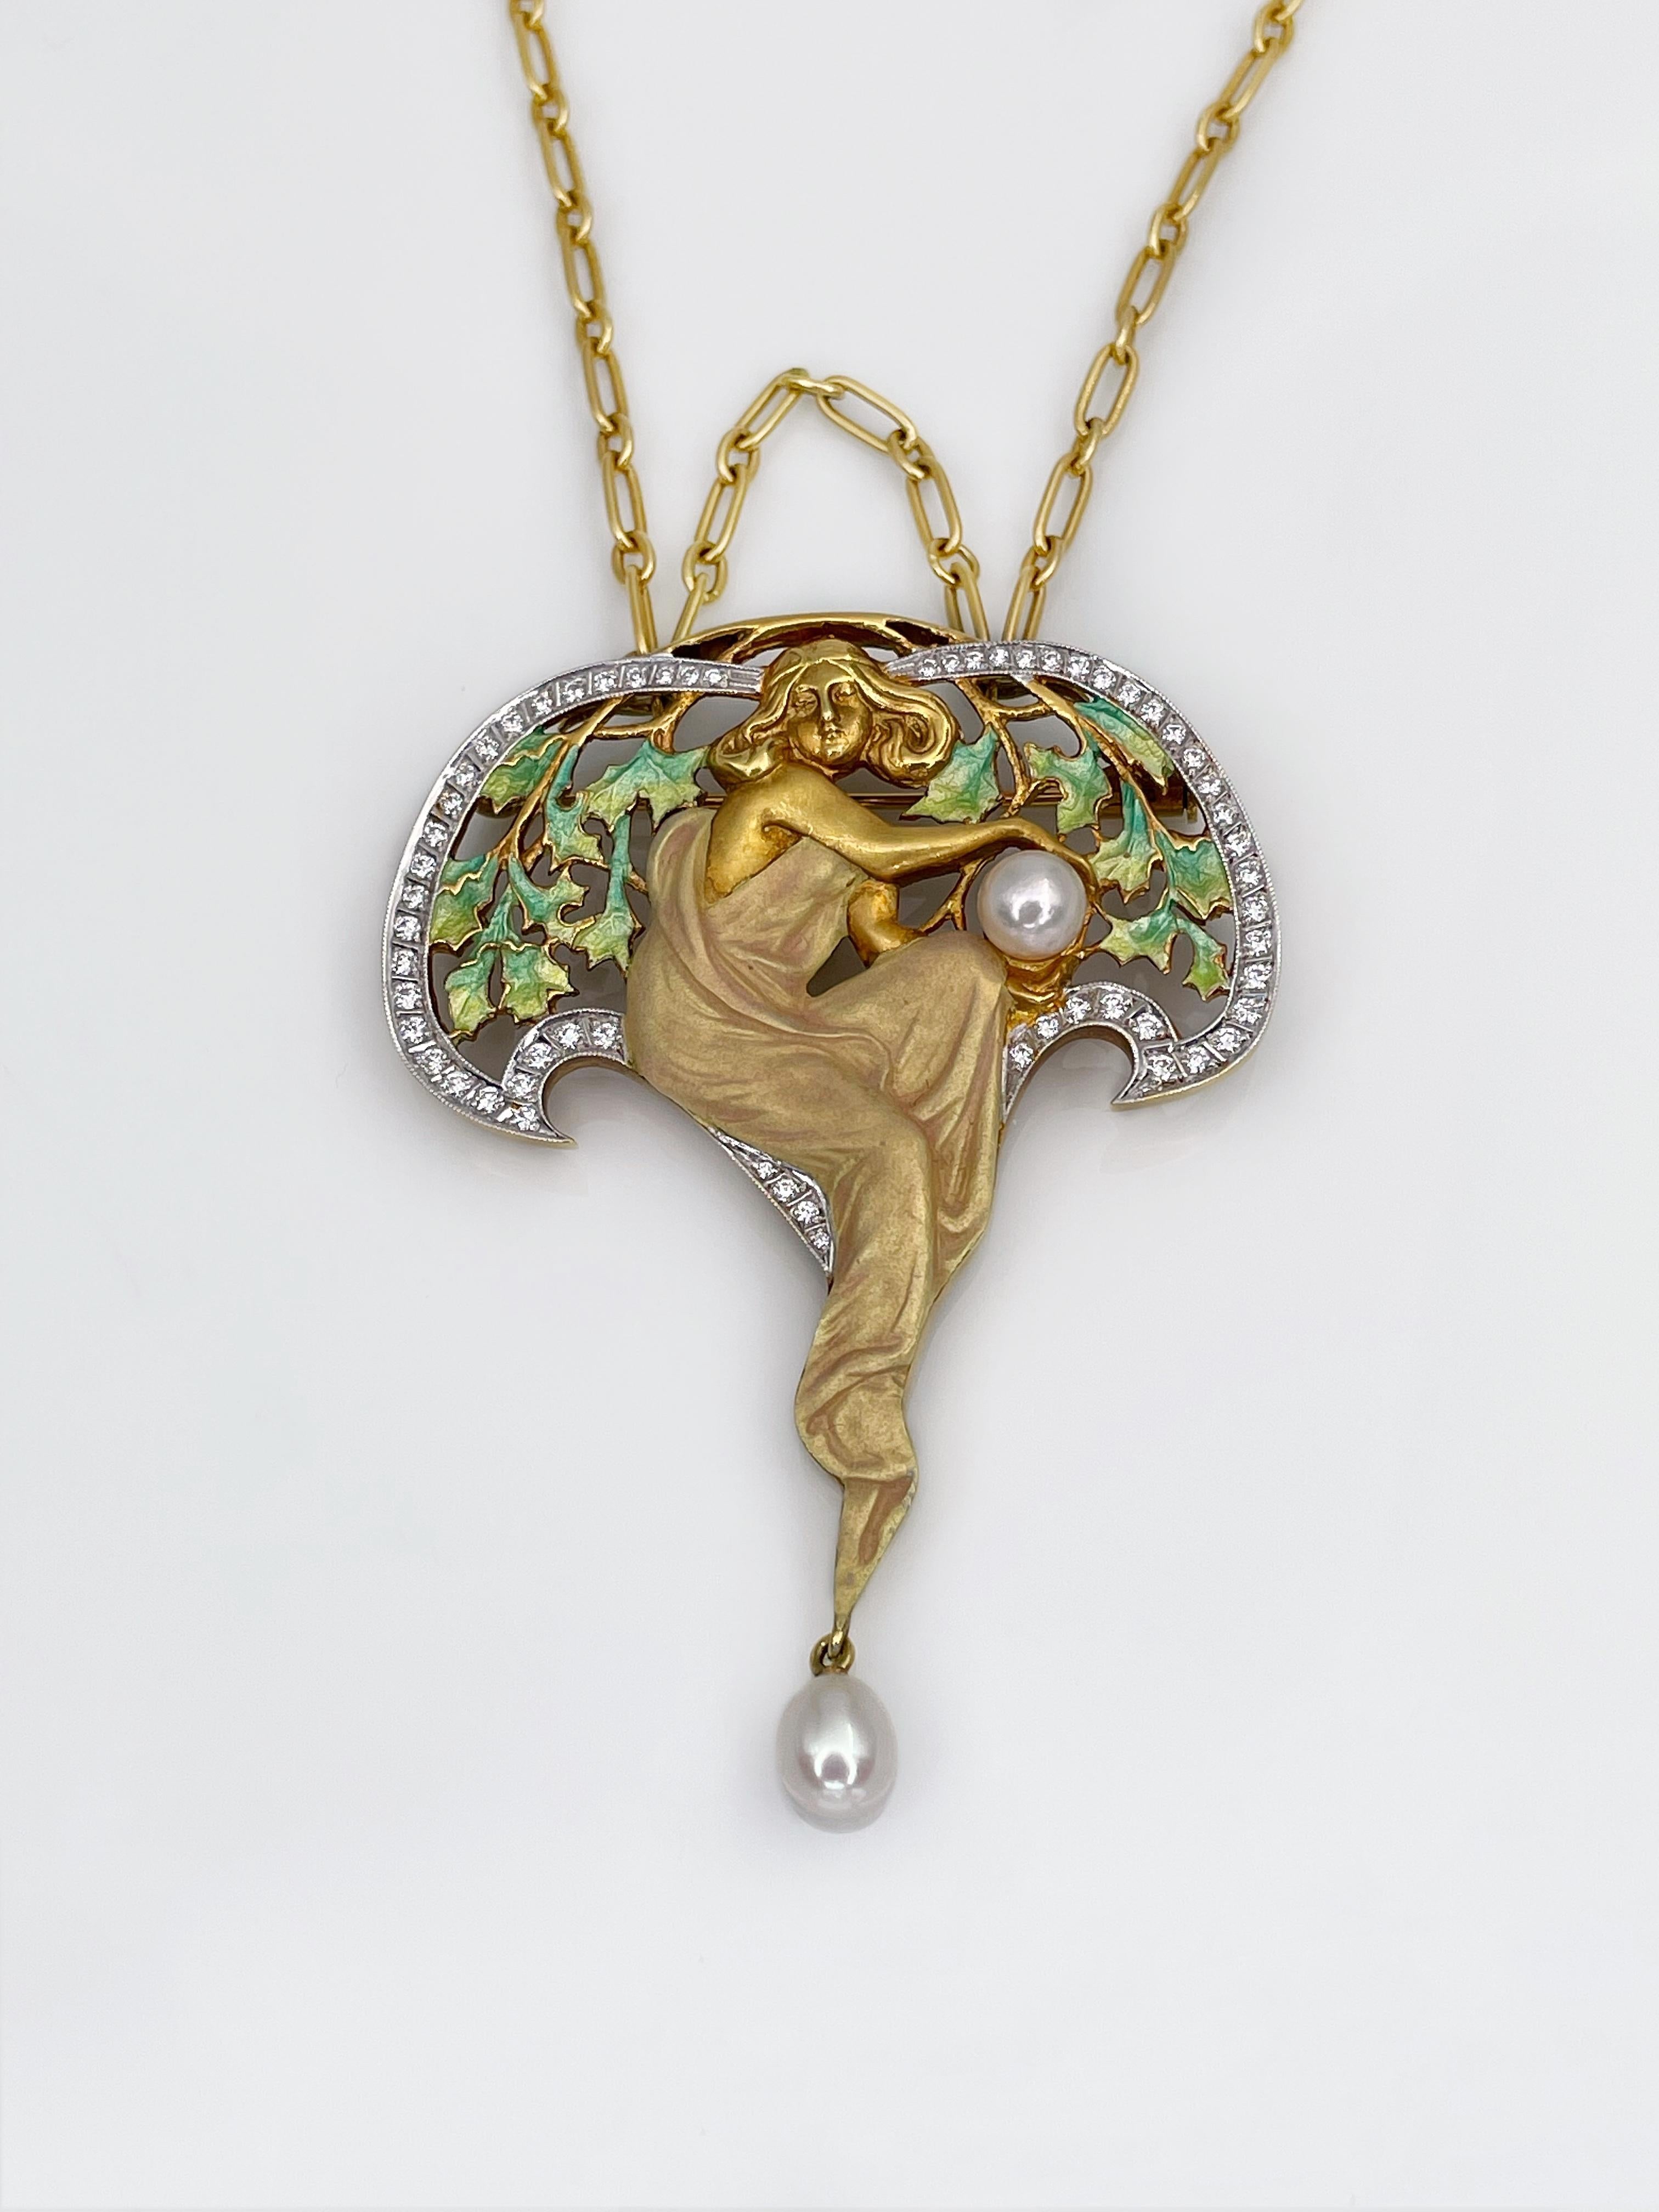 Brilliant Cut Art Nouveau Style Masriera 18K Gold Diamond Enamel Pearl Nymph Pendant Brooch